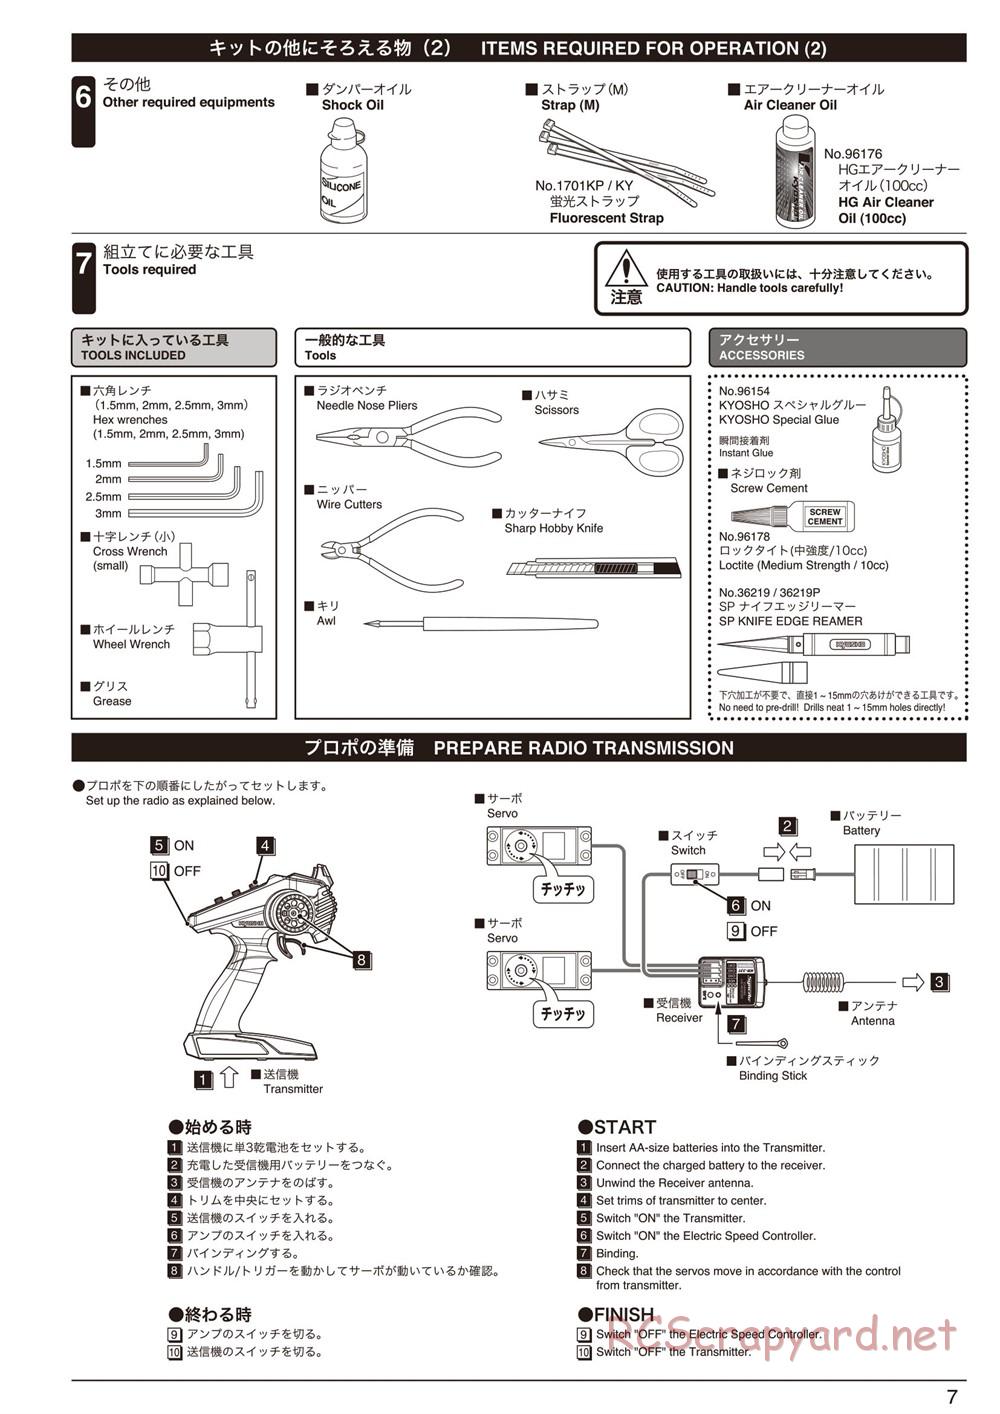 Kyosho - Inferno MP9 TKI4 - Manual - Page 7